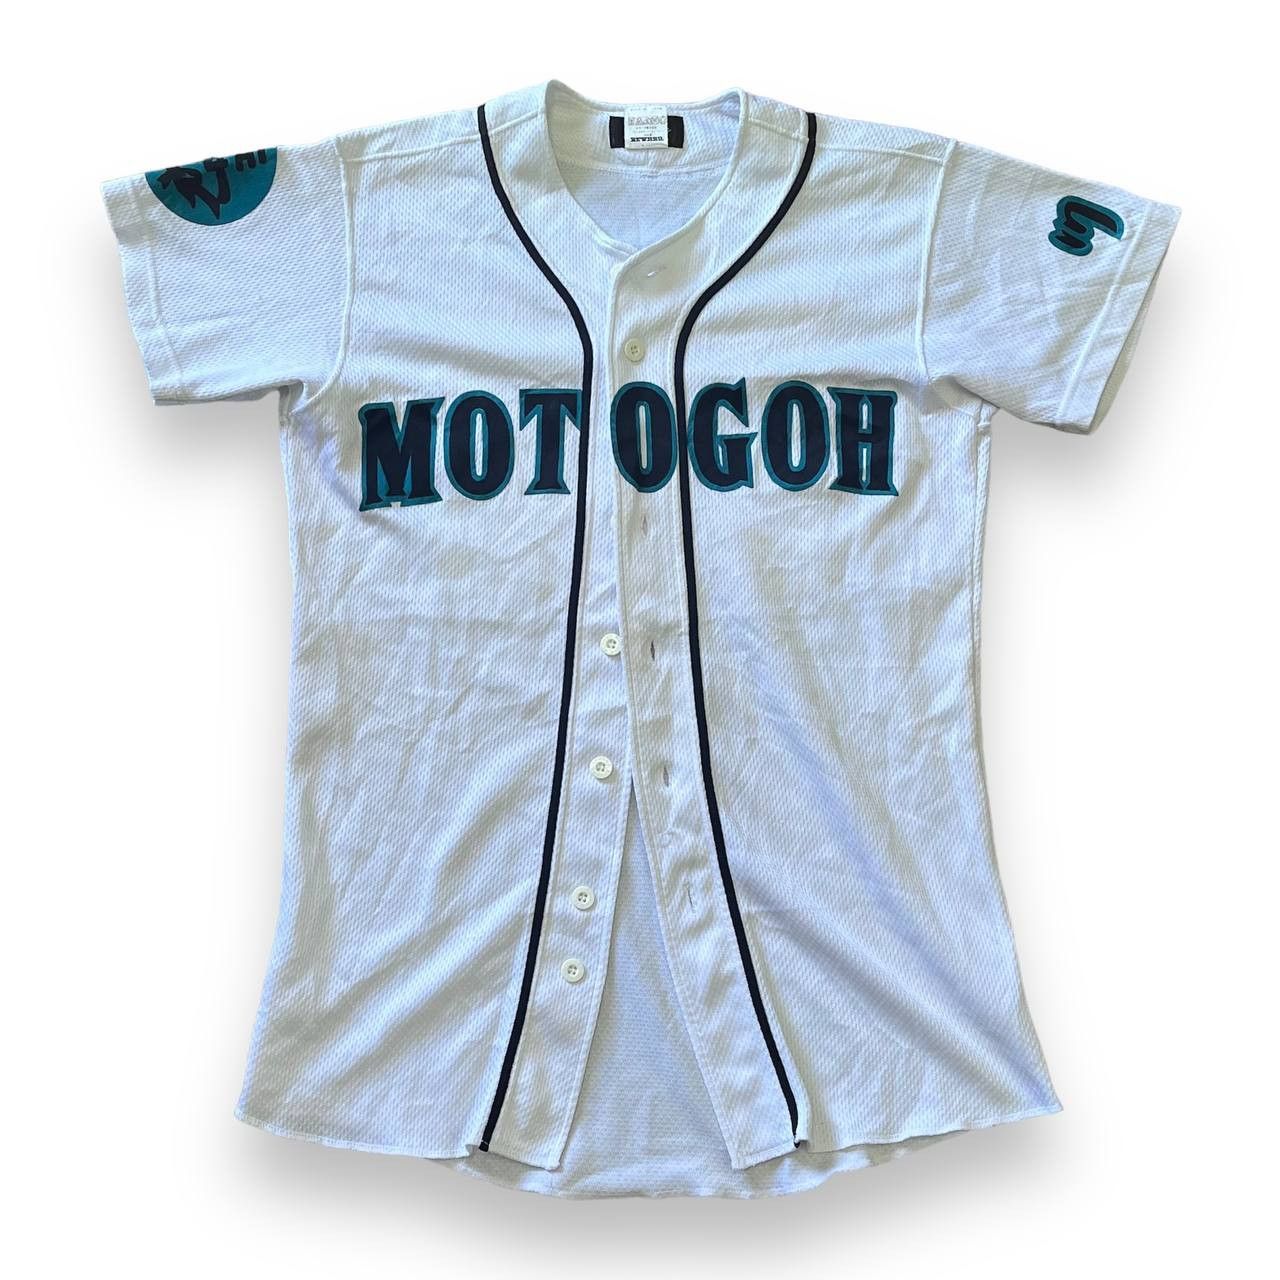 Vintage Japan Baseball Team Jersey Motogoh 1990s - 12